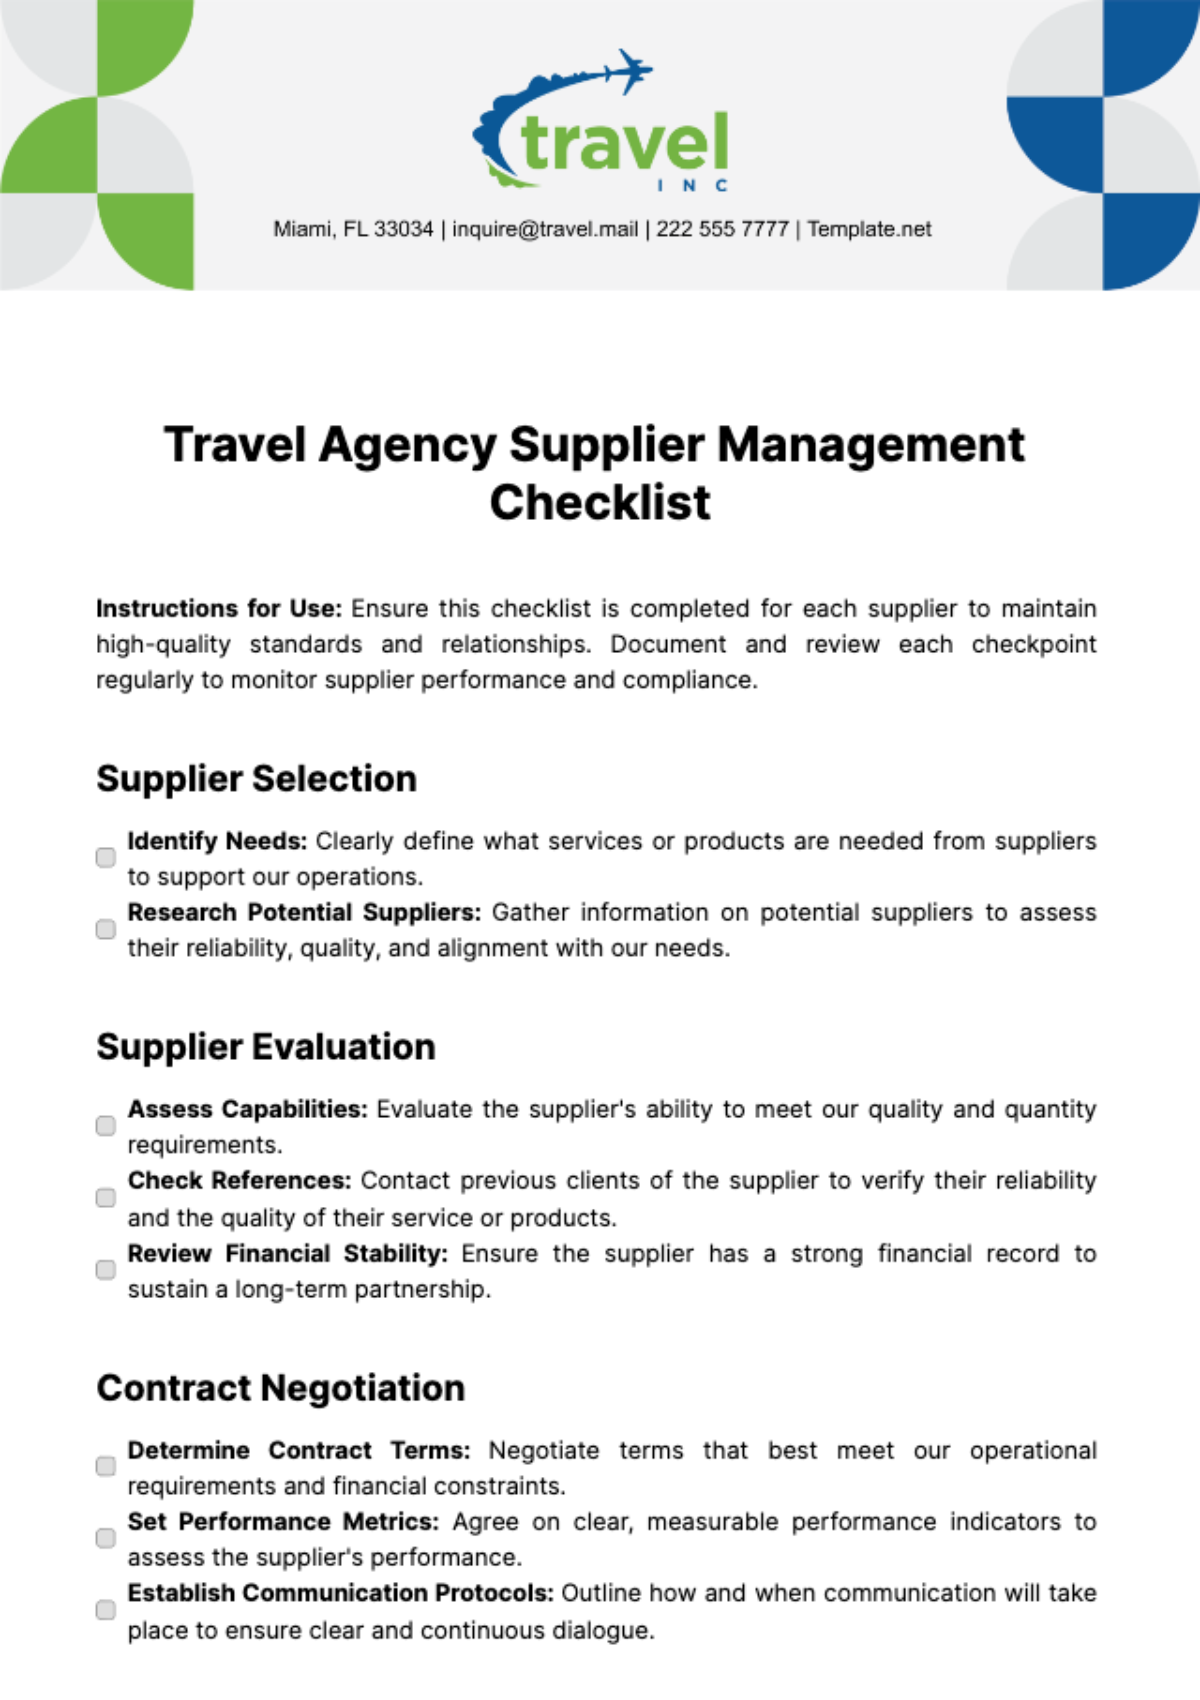 Travel Agency Supplier Management Checklist Template